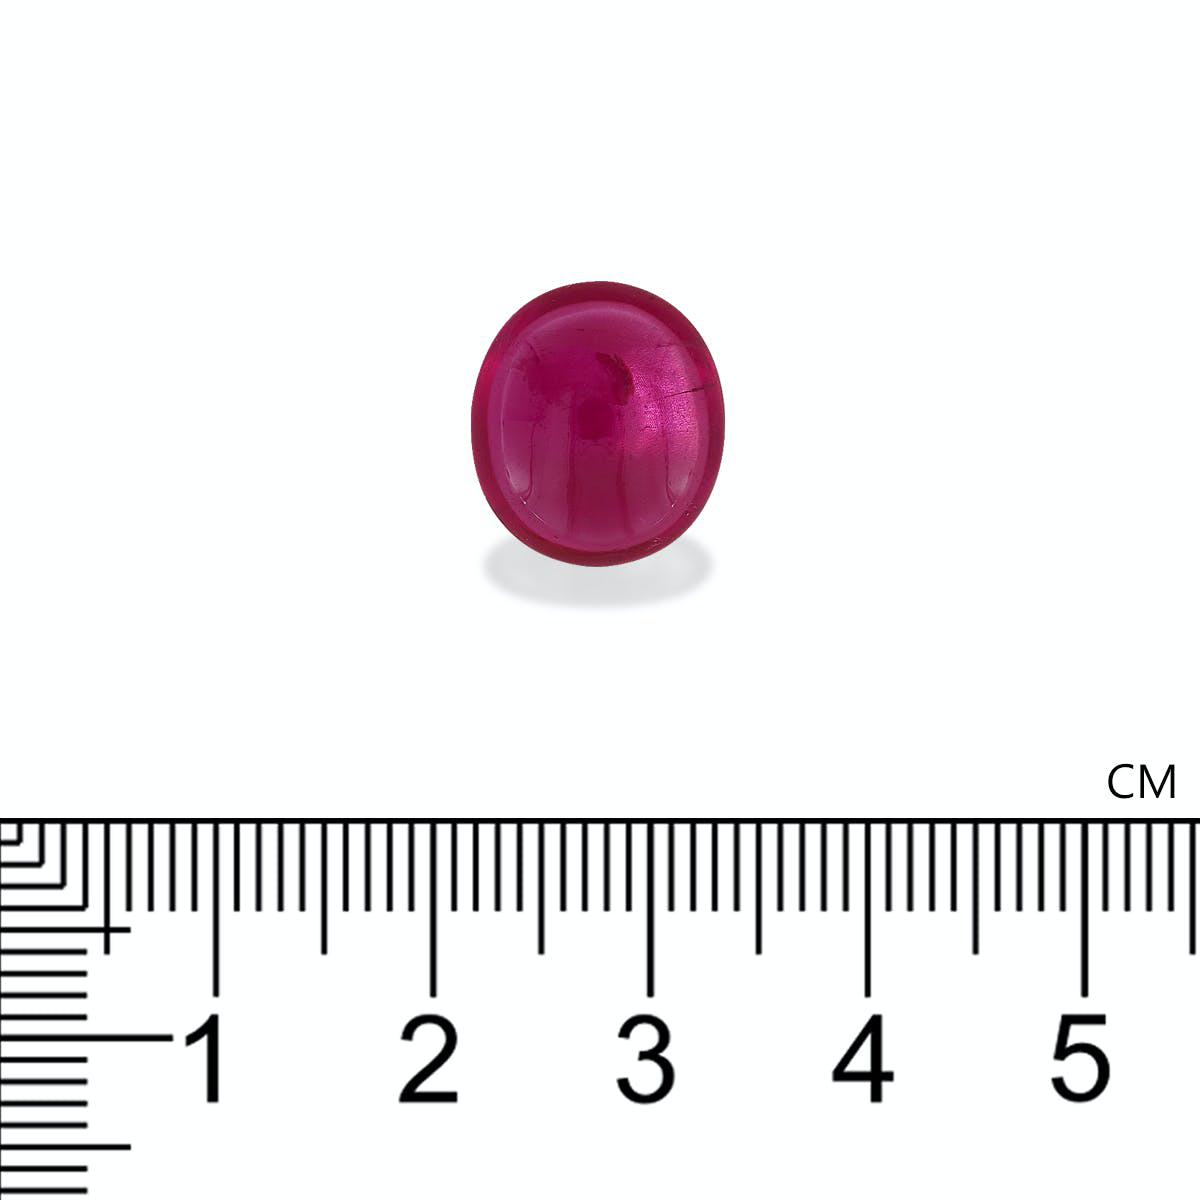 Picture of Vivid Pink Rubellite Tourmaline 7.39ct (RL0369)